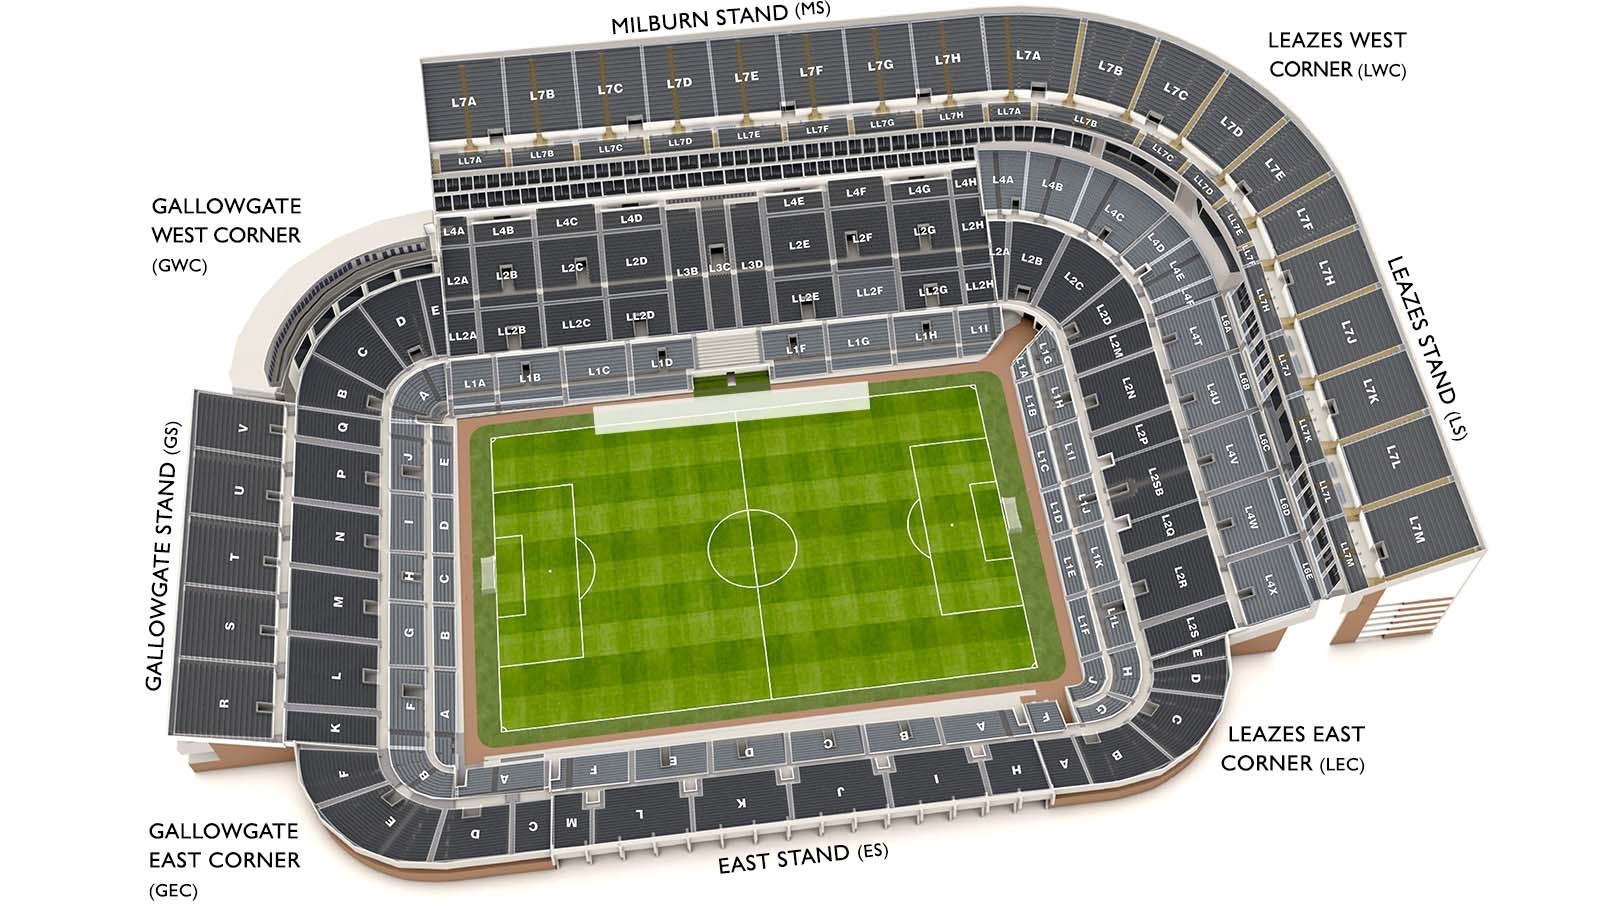 3D stadium plan of St. James' Park